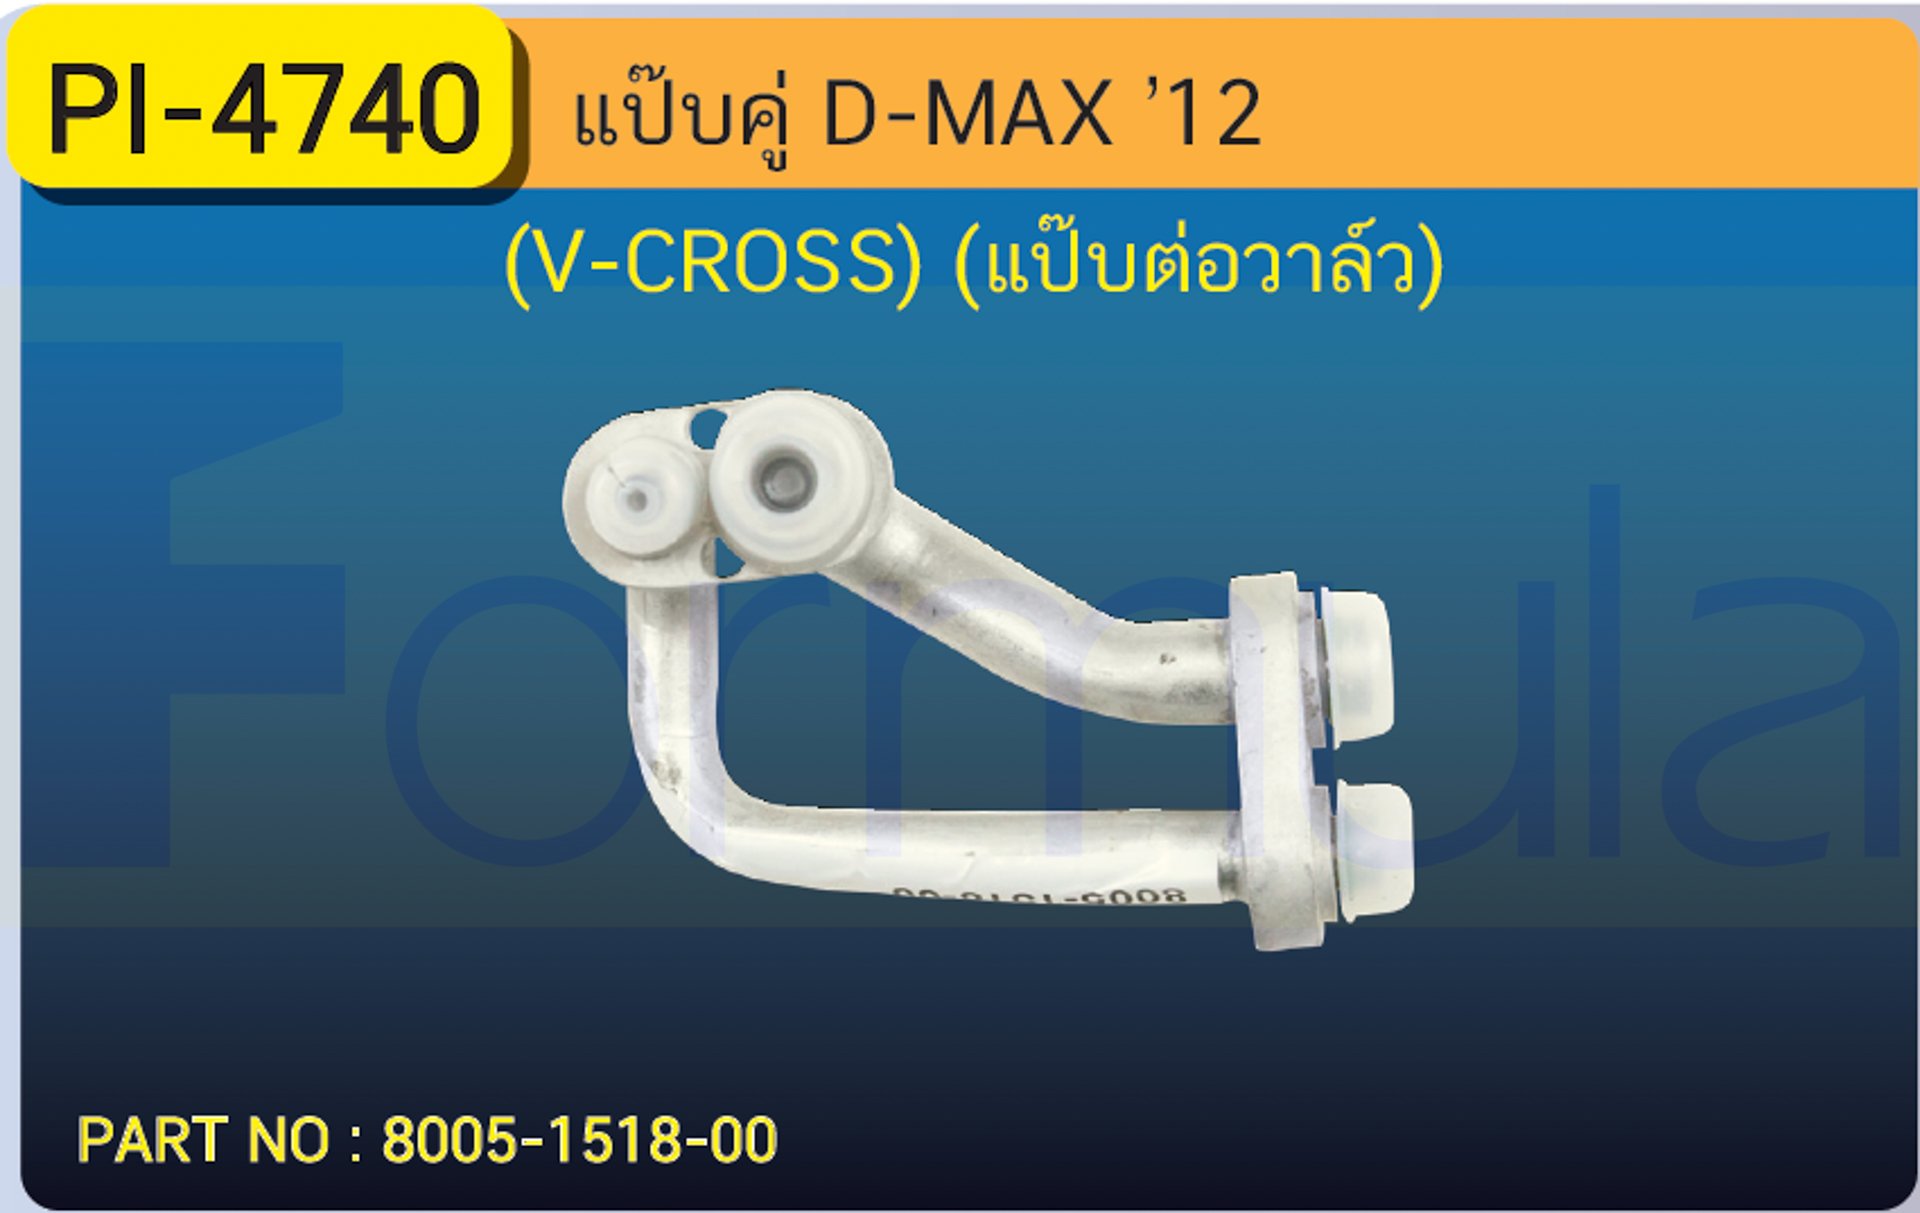 ALU. PIPE 12.7mm. ISUZU D-MAX '2012 (V-CROSS)(แป๊ปต่อวาล์ว)